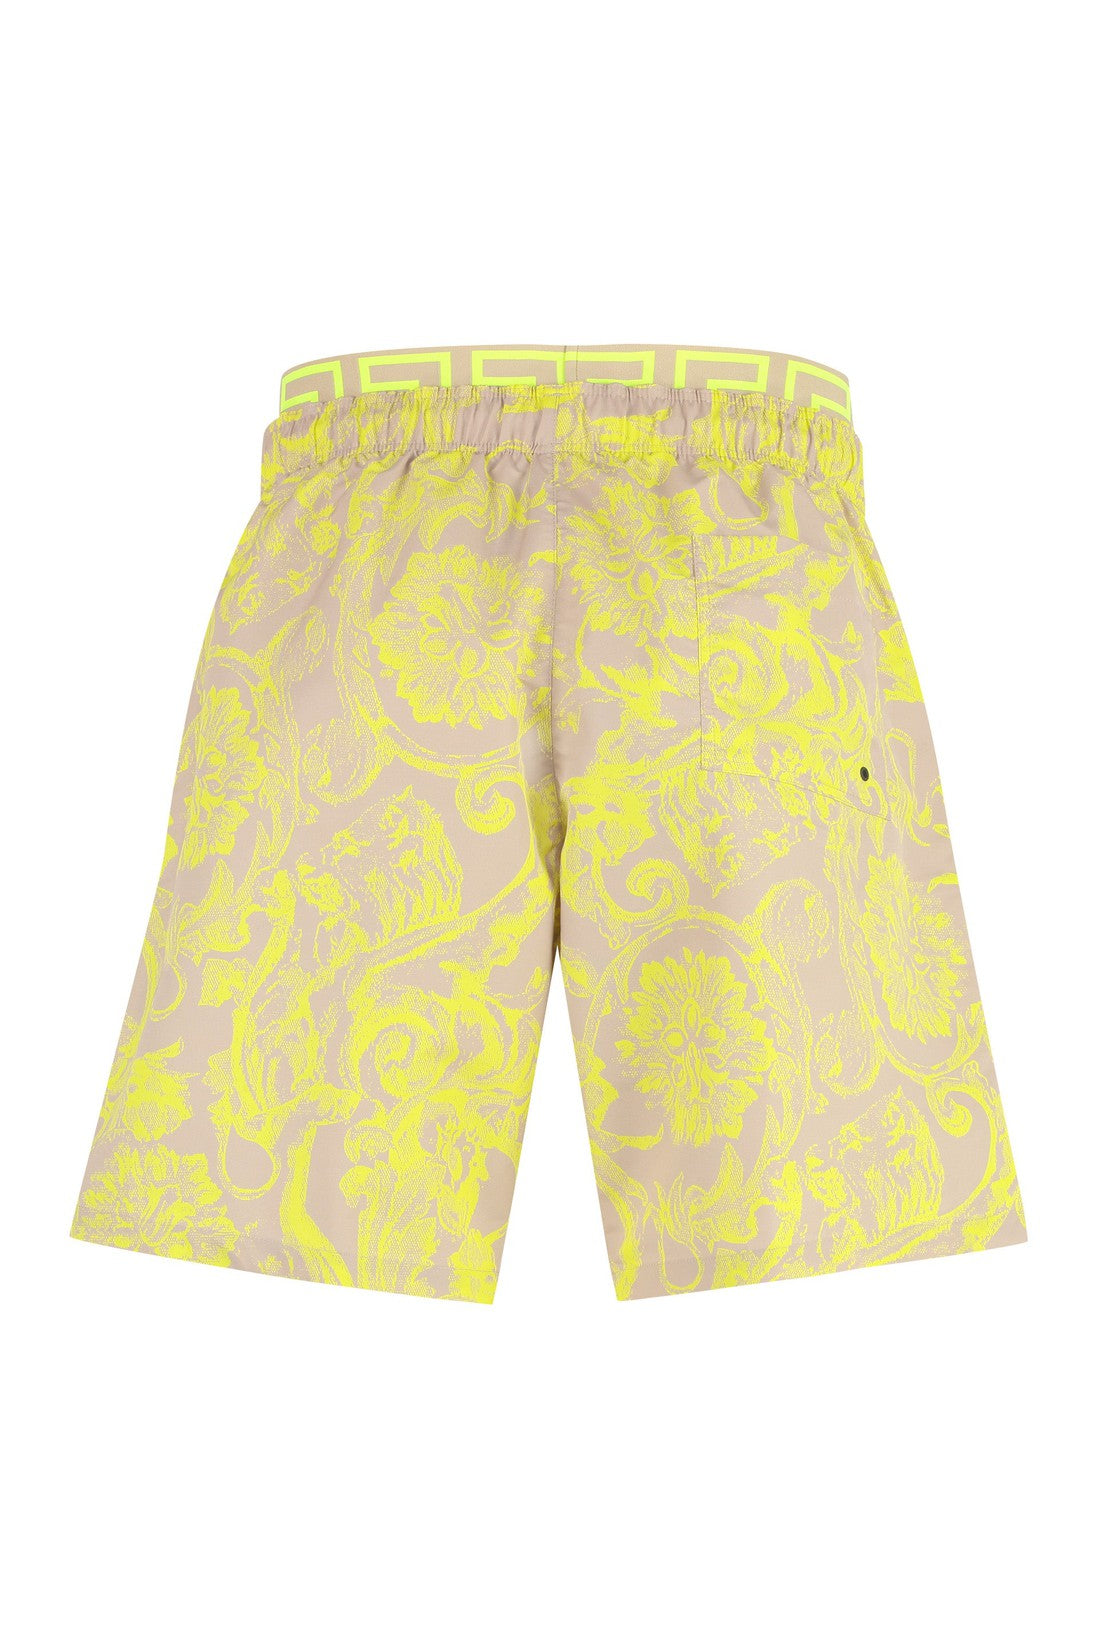 Versace-OUTLET-SALE-Printed swim shorts-ARCHIVIST